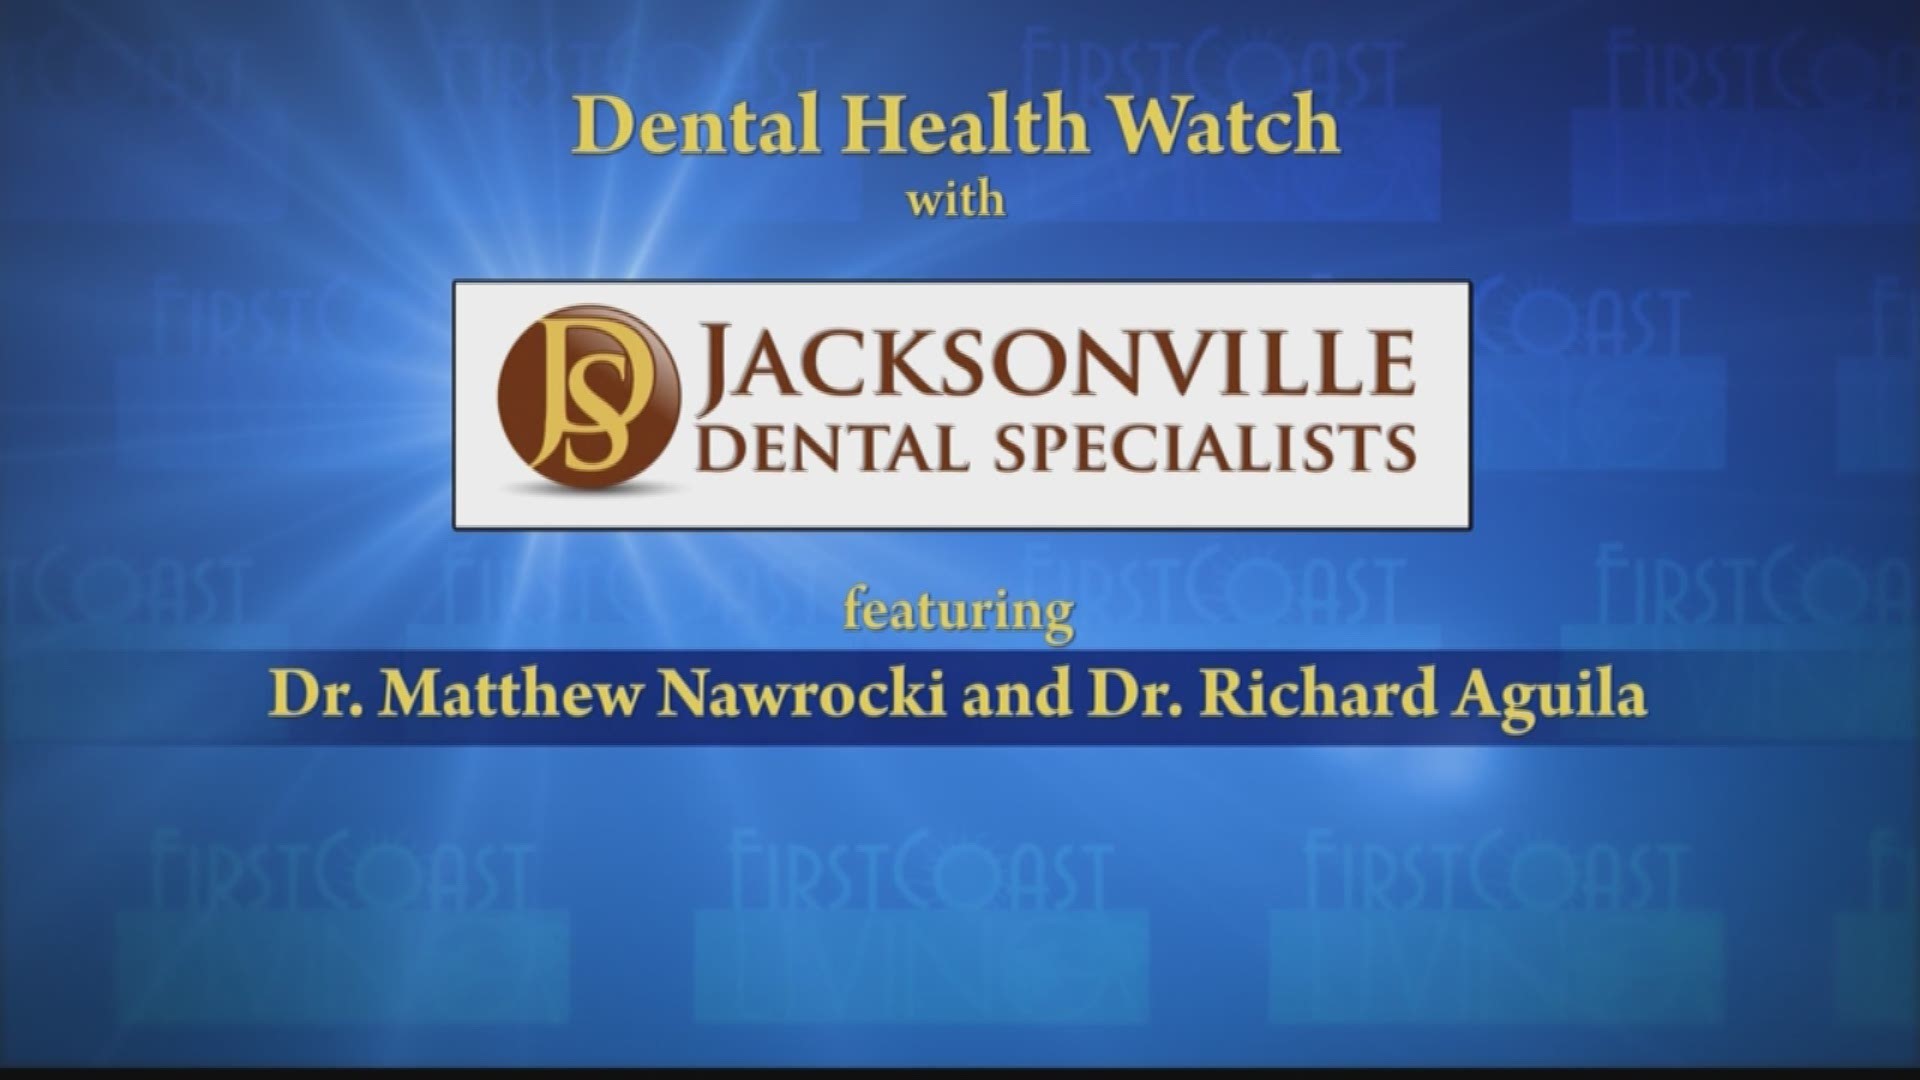 Jacksonville Dental Specialists